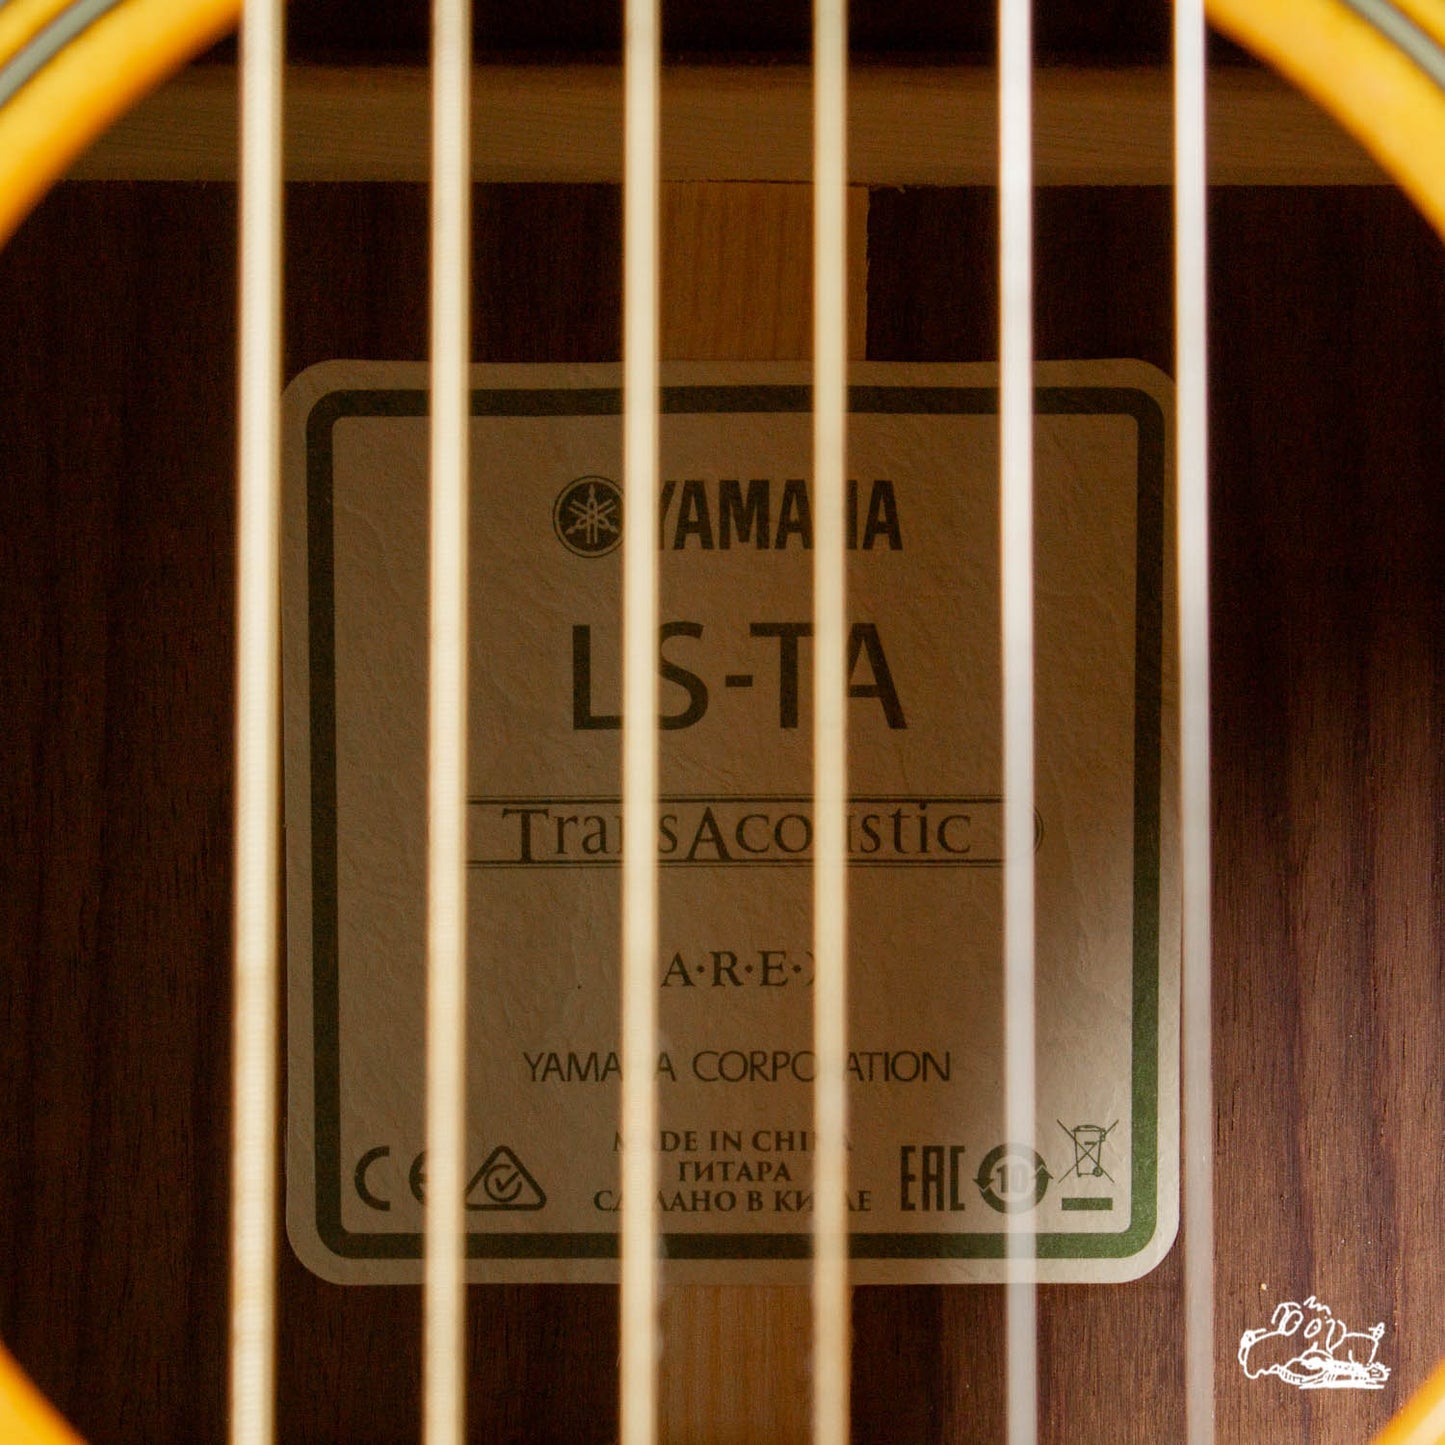 2010's Yamaha LS-TA Transacoustic Concert Body Solid Wood Guitar